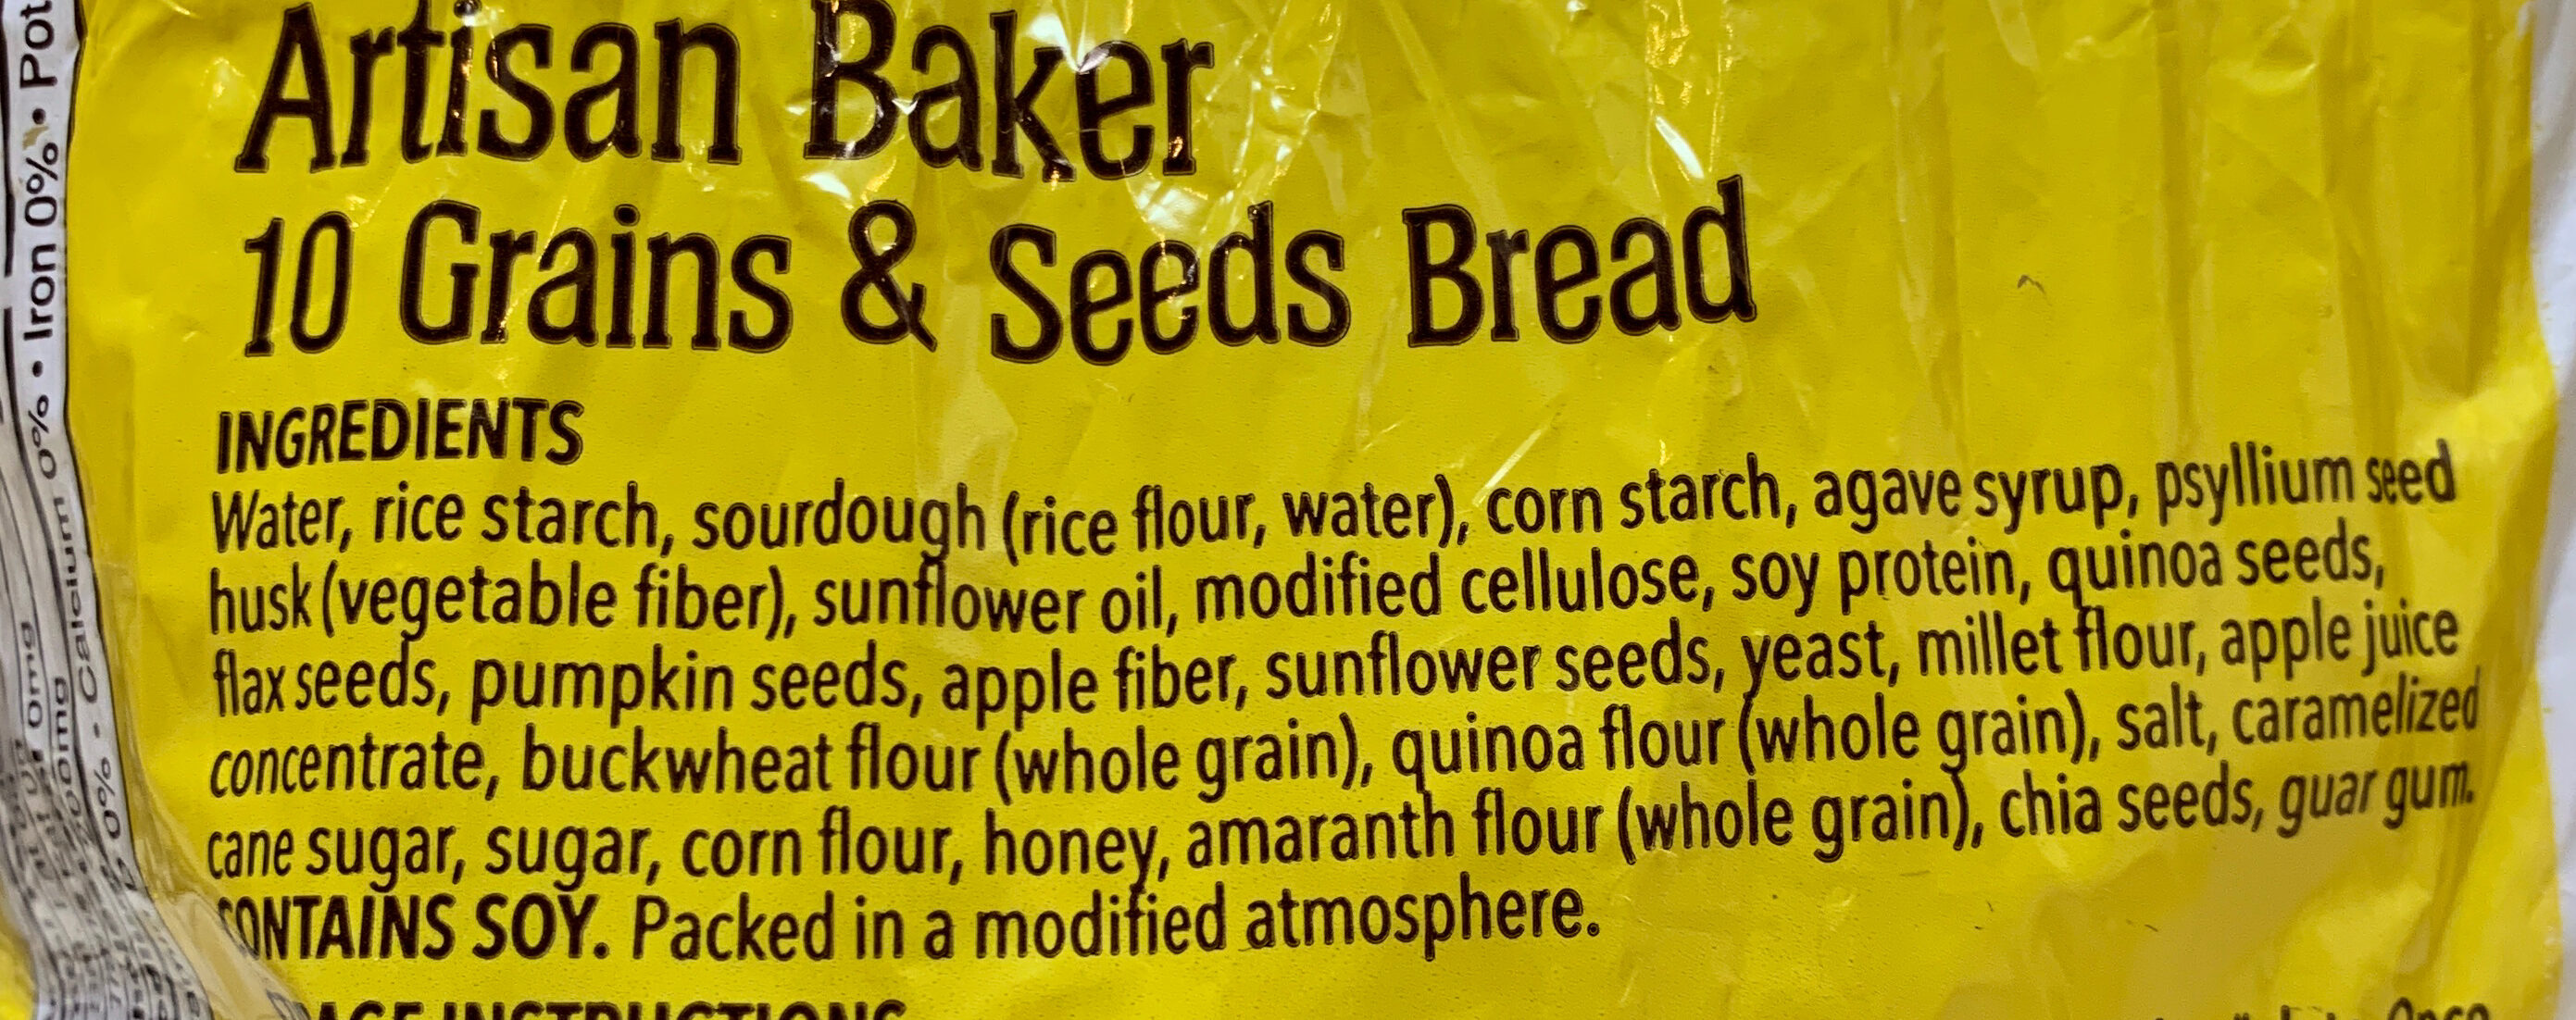 Gluten free artisan baker 10 grains & seeds bread - Ingredients